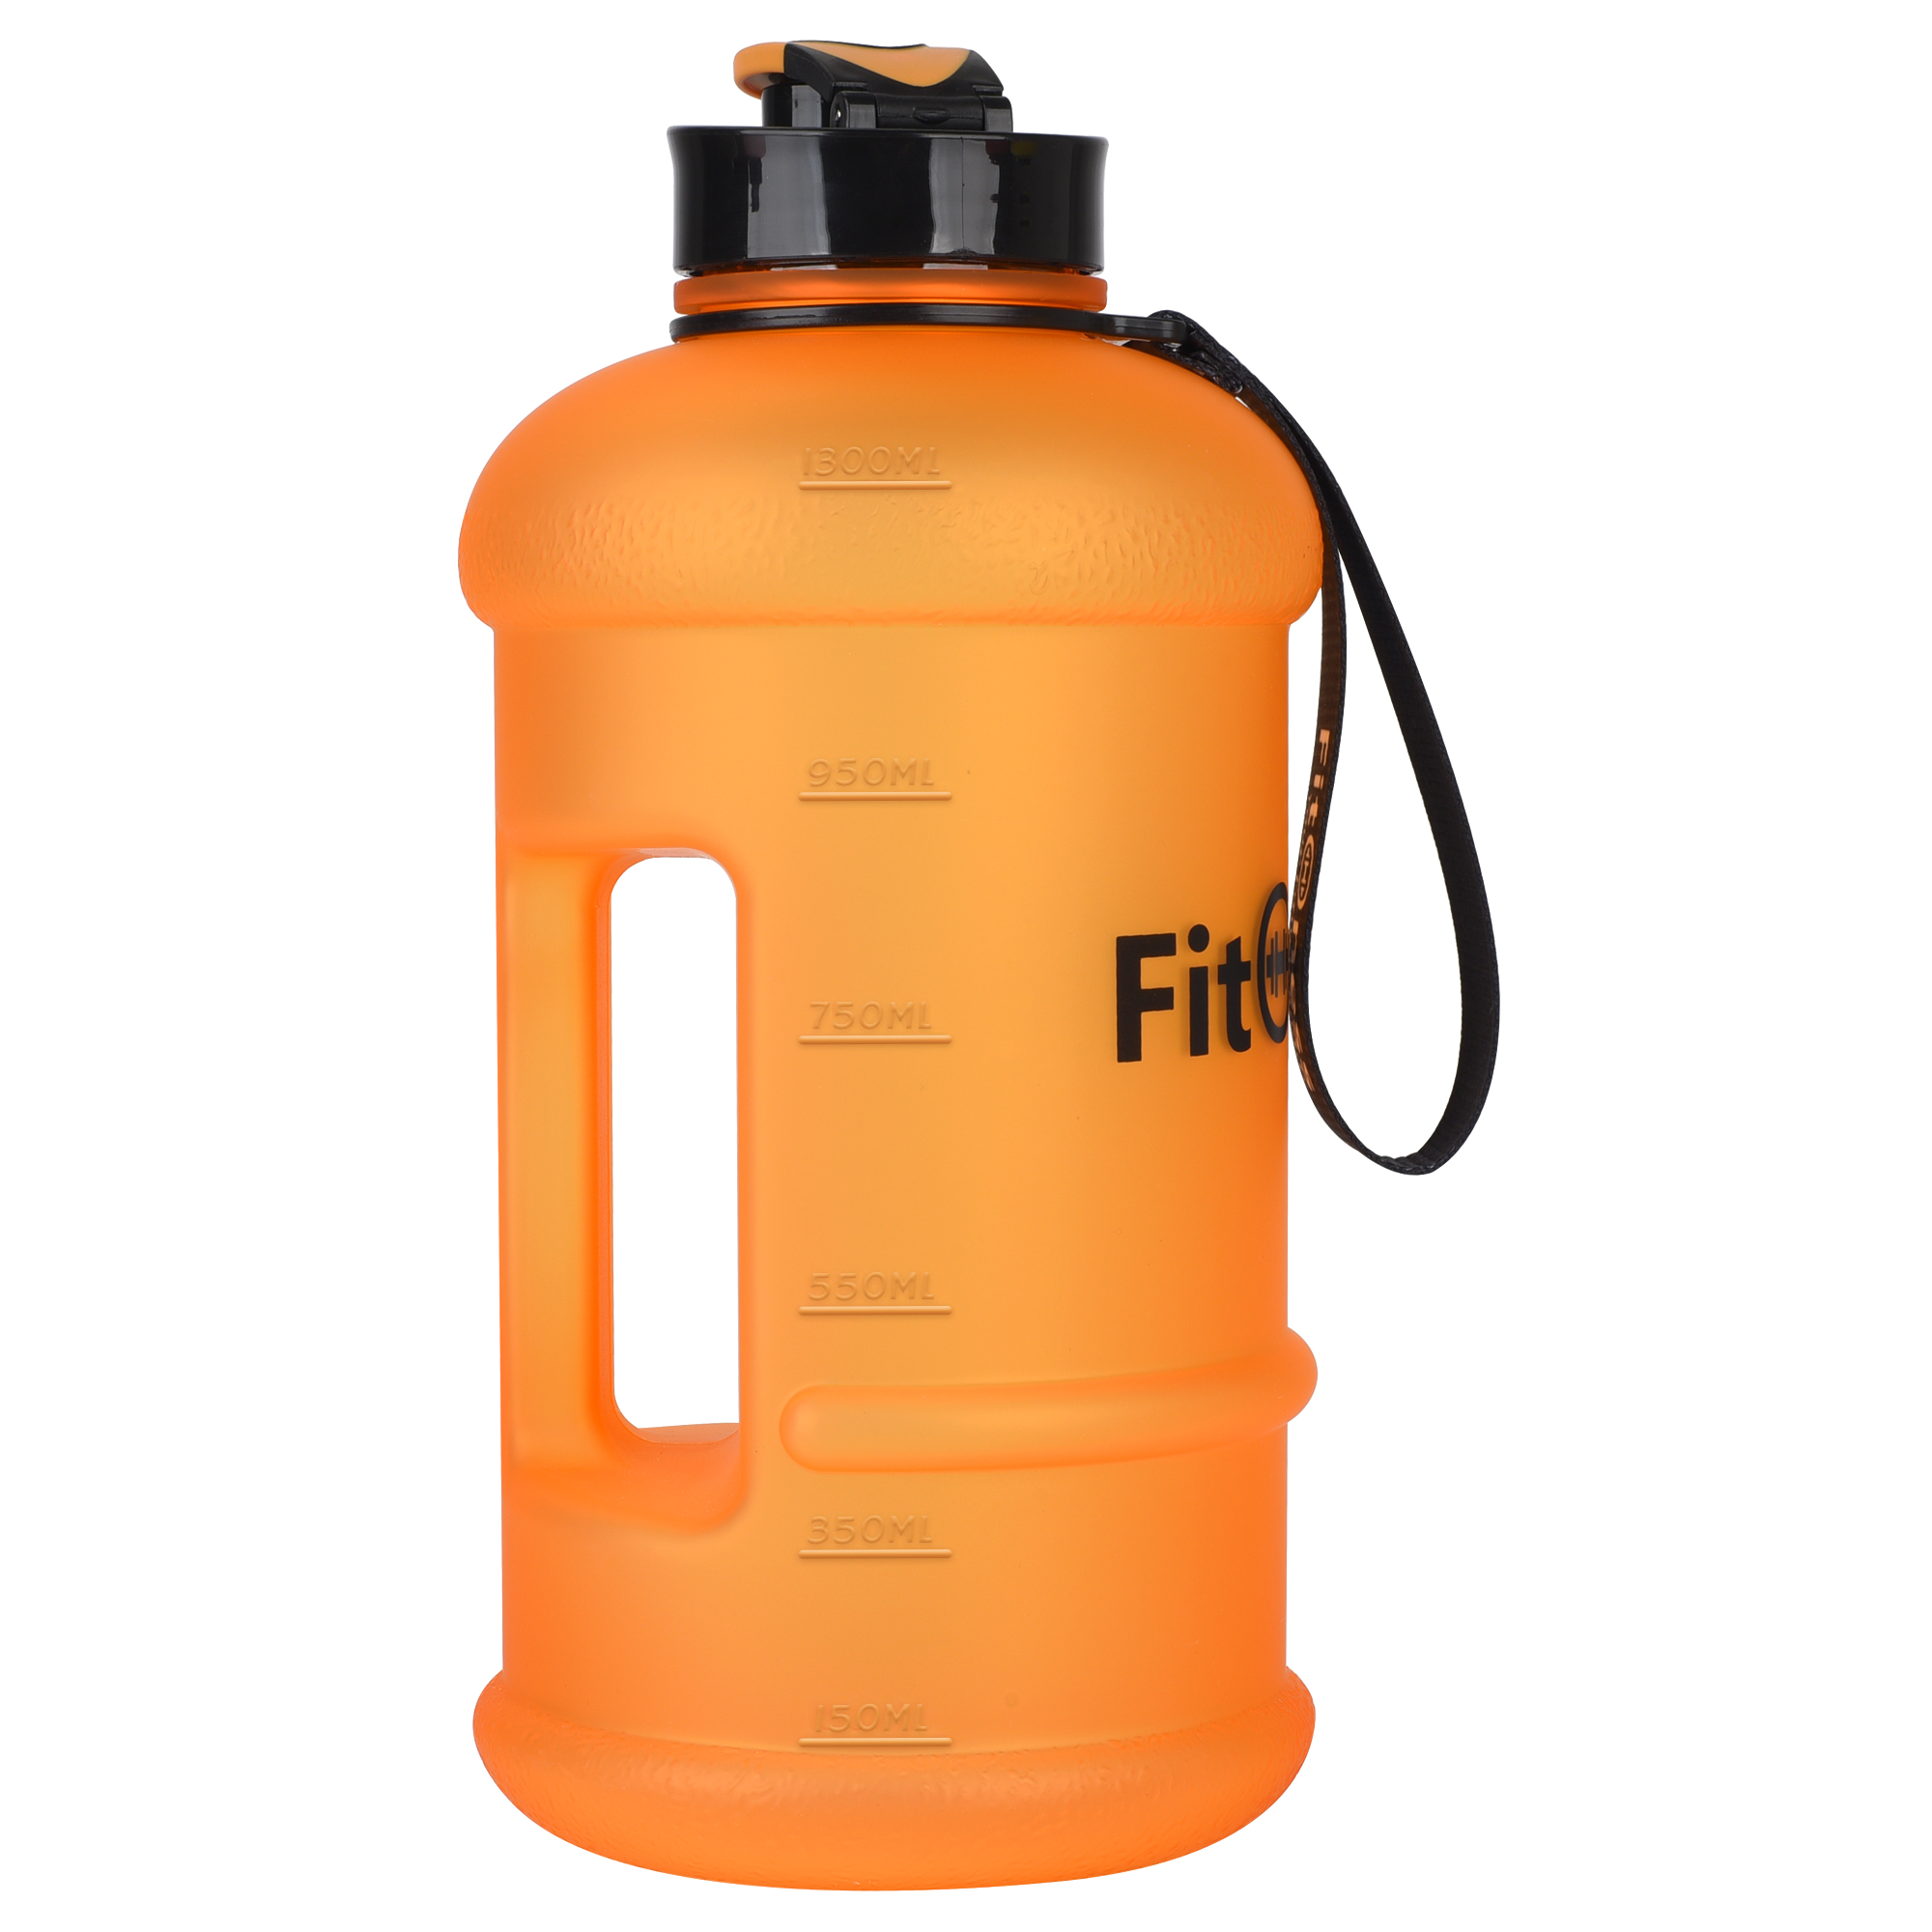 Brand Fitoness Jug Bottle 1.3l / 44oz Orange Sports